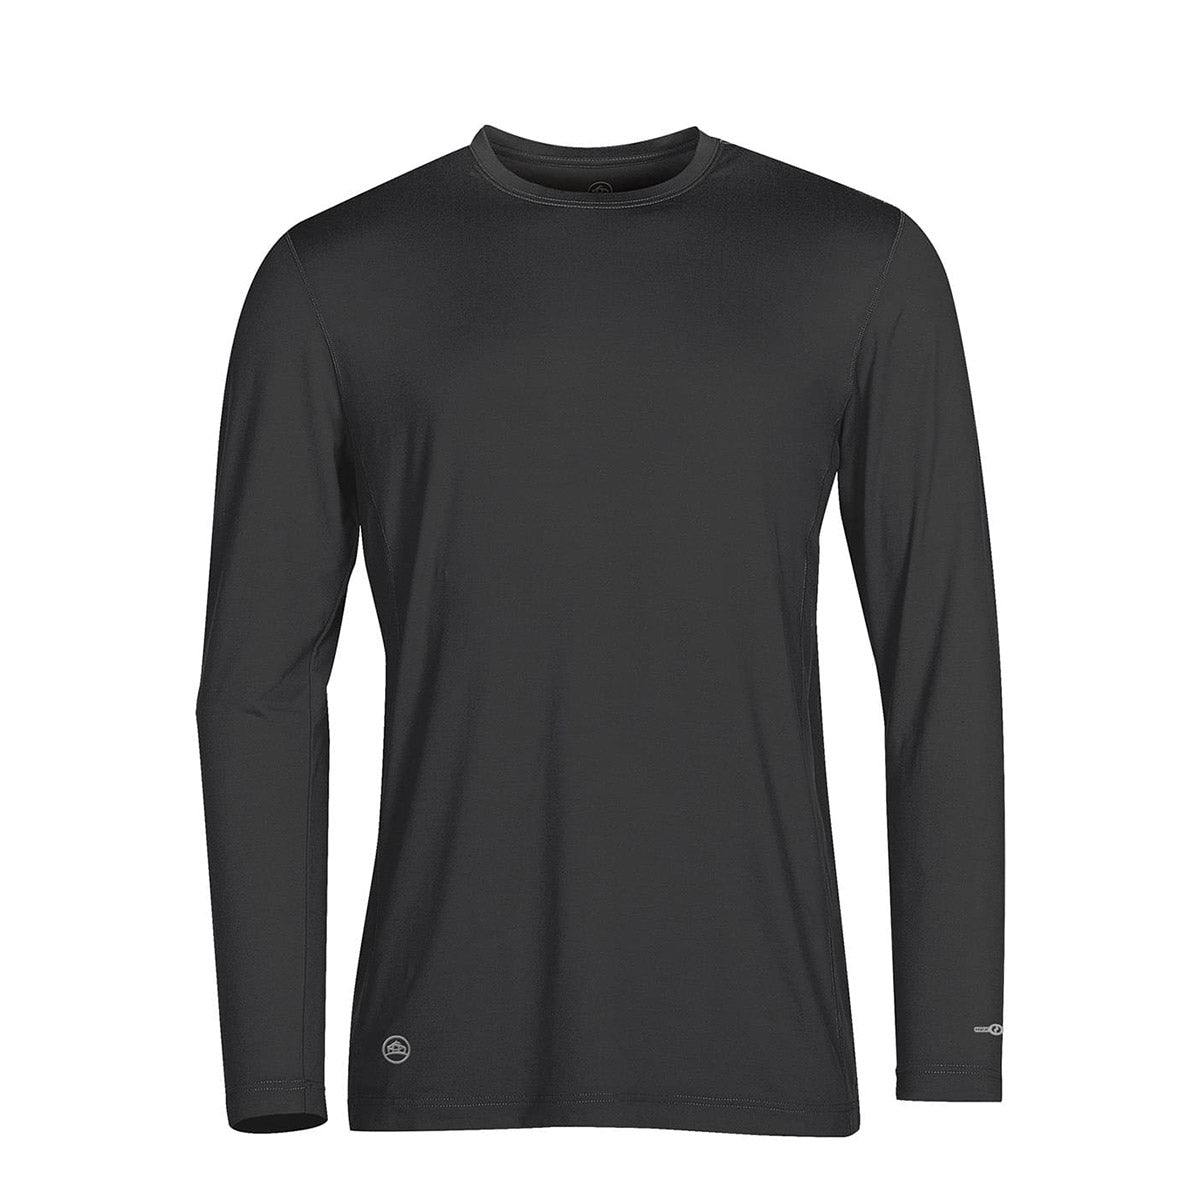 X By Gottex Black Long Sleeve Sports Performance Shirt Size S/P